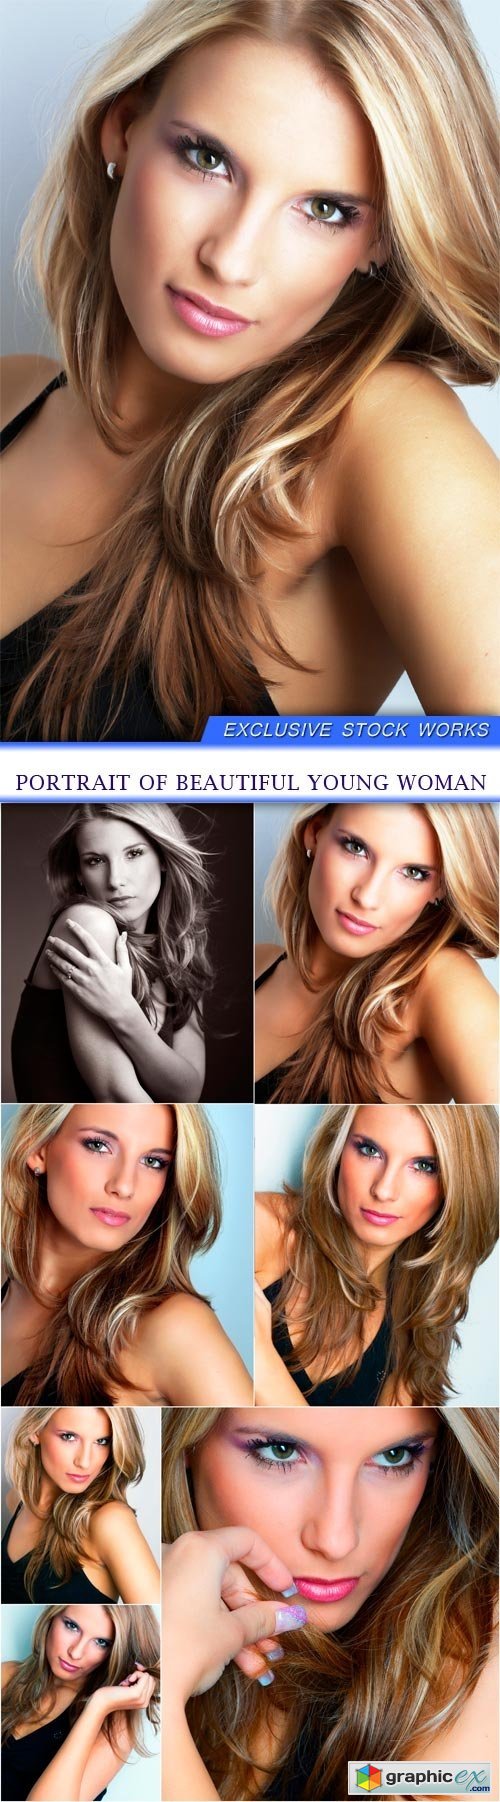 Portrait of beautiful young woman 7X JPEG